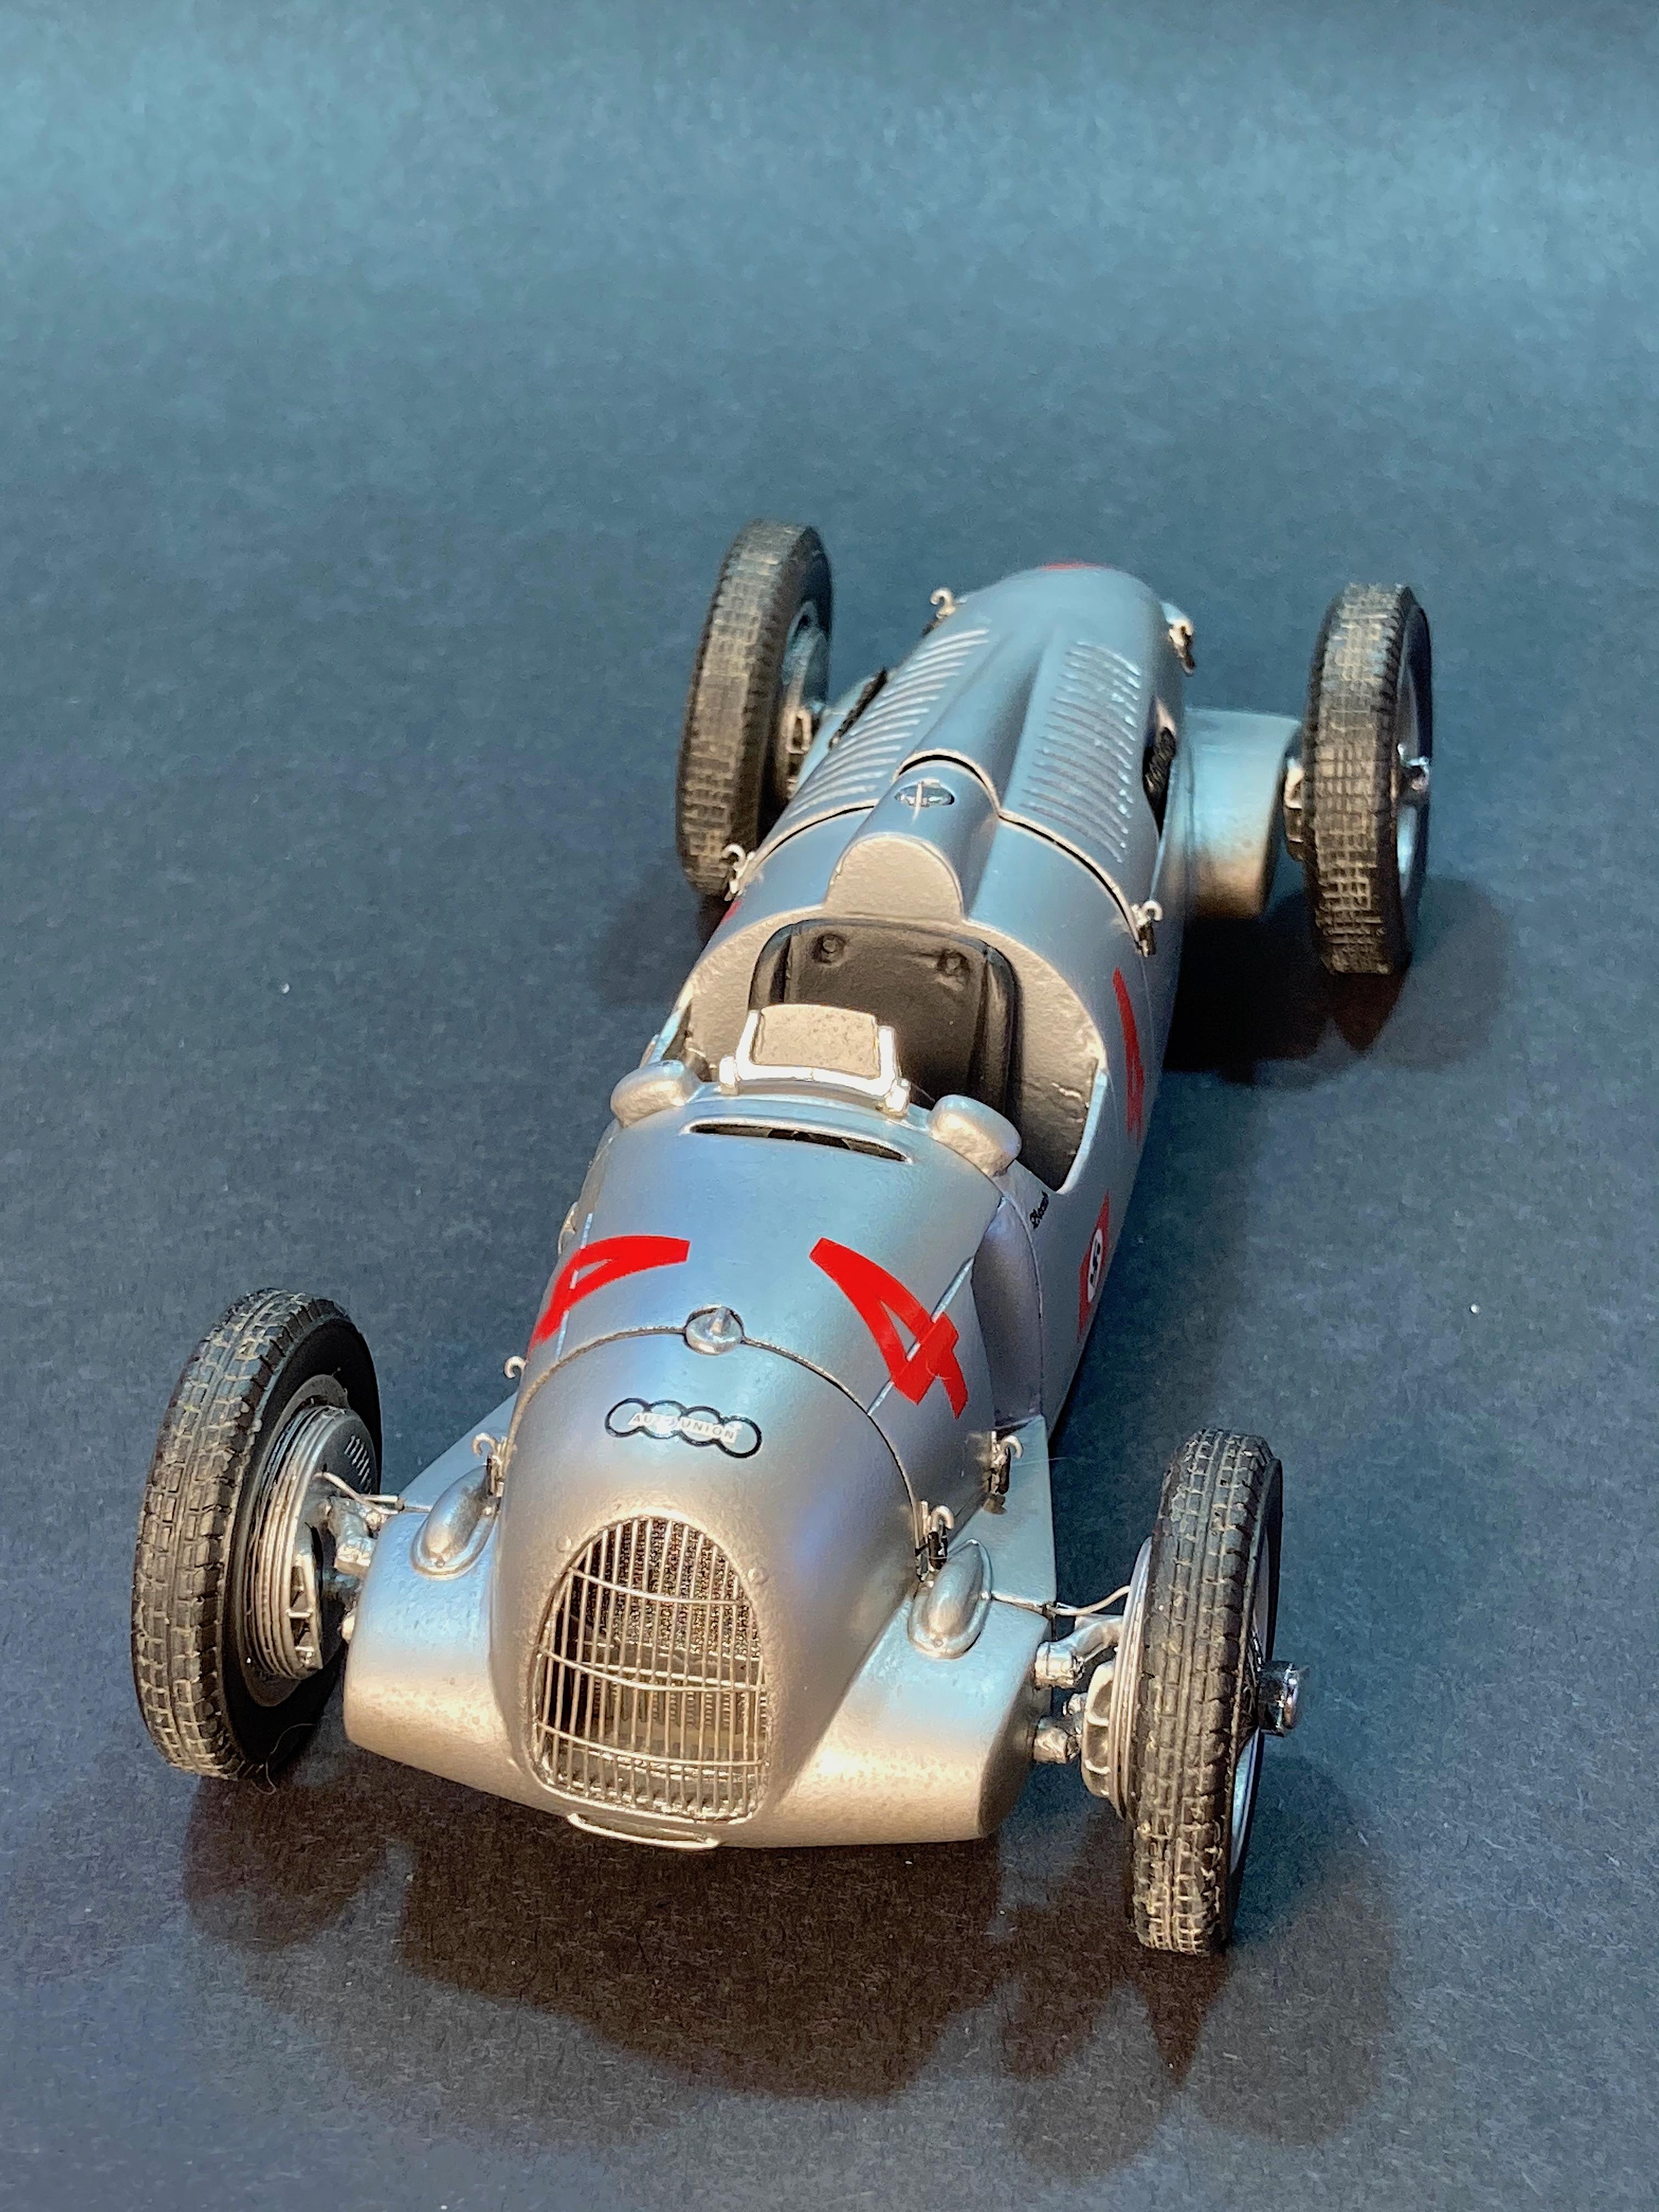 1937 AUTO UNION C type - Vanderbilt Cup Race by FPPMODELOS - Other Racing:  Road Racing, Salt Flat Racers - Model Cars Magazine Forum